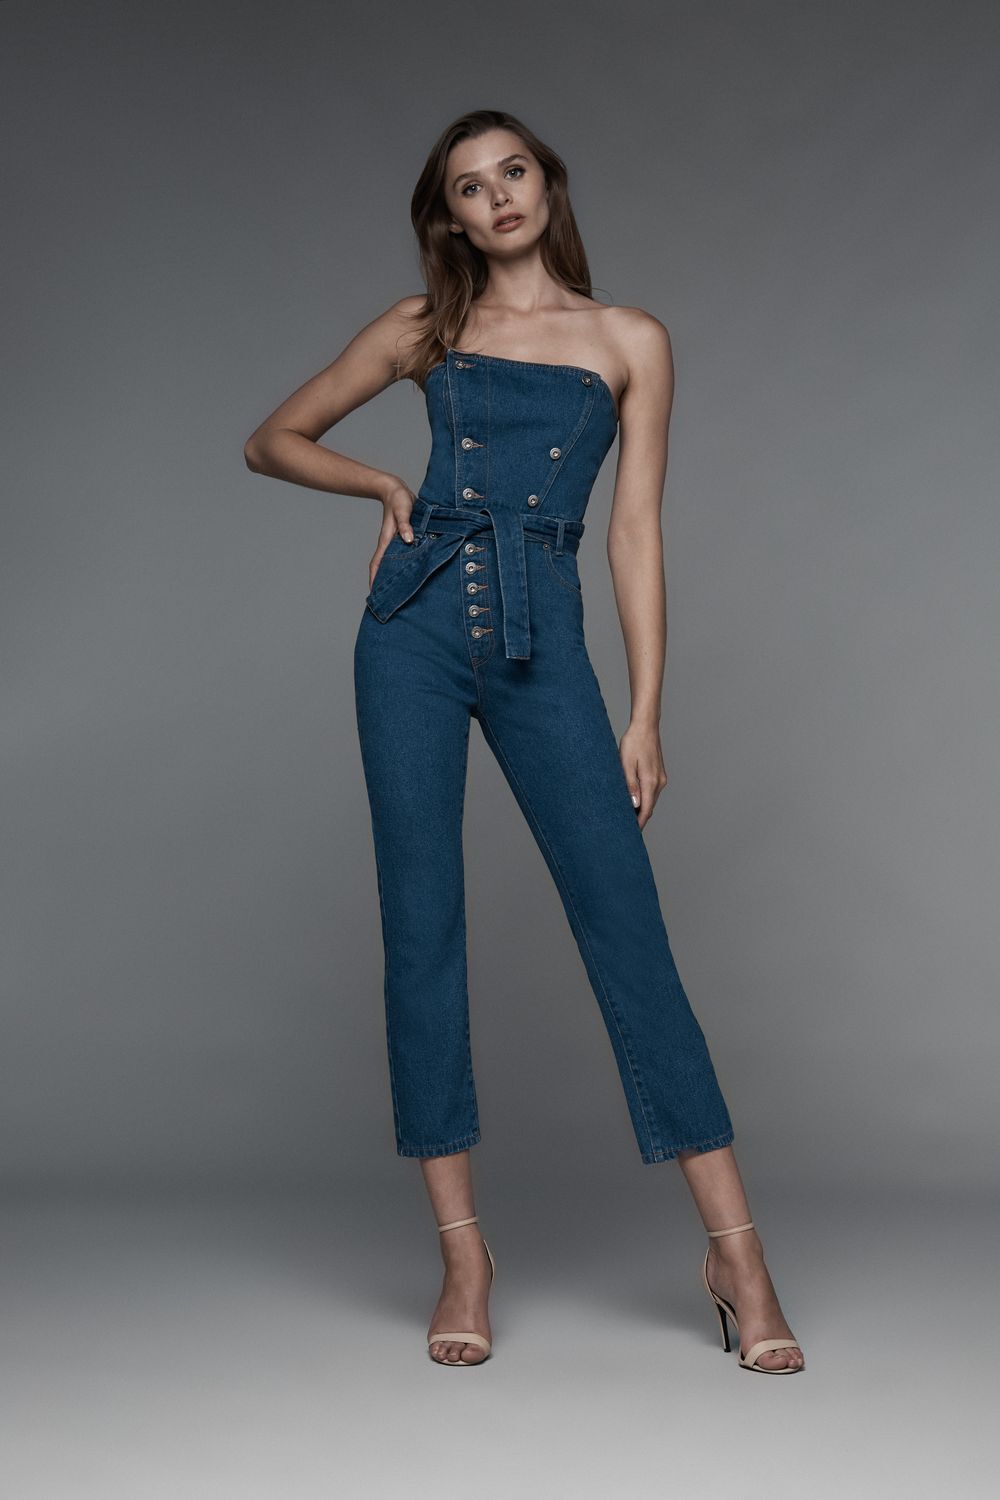 verbinding verbroken Patriottisch Elegantie Blue Jean Bustier Jumpsuit in Vintage | Bardot